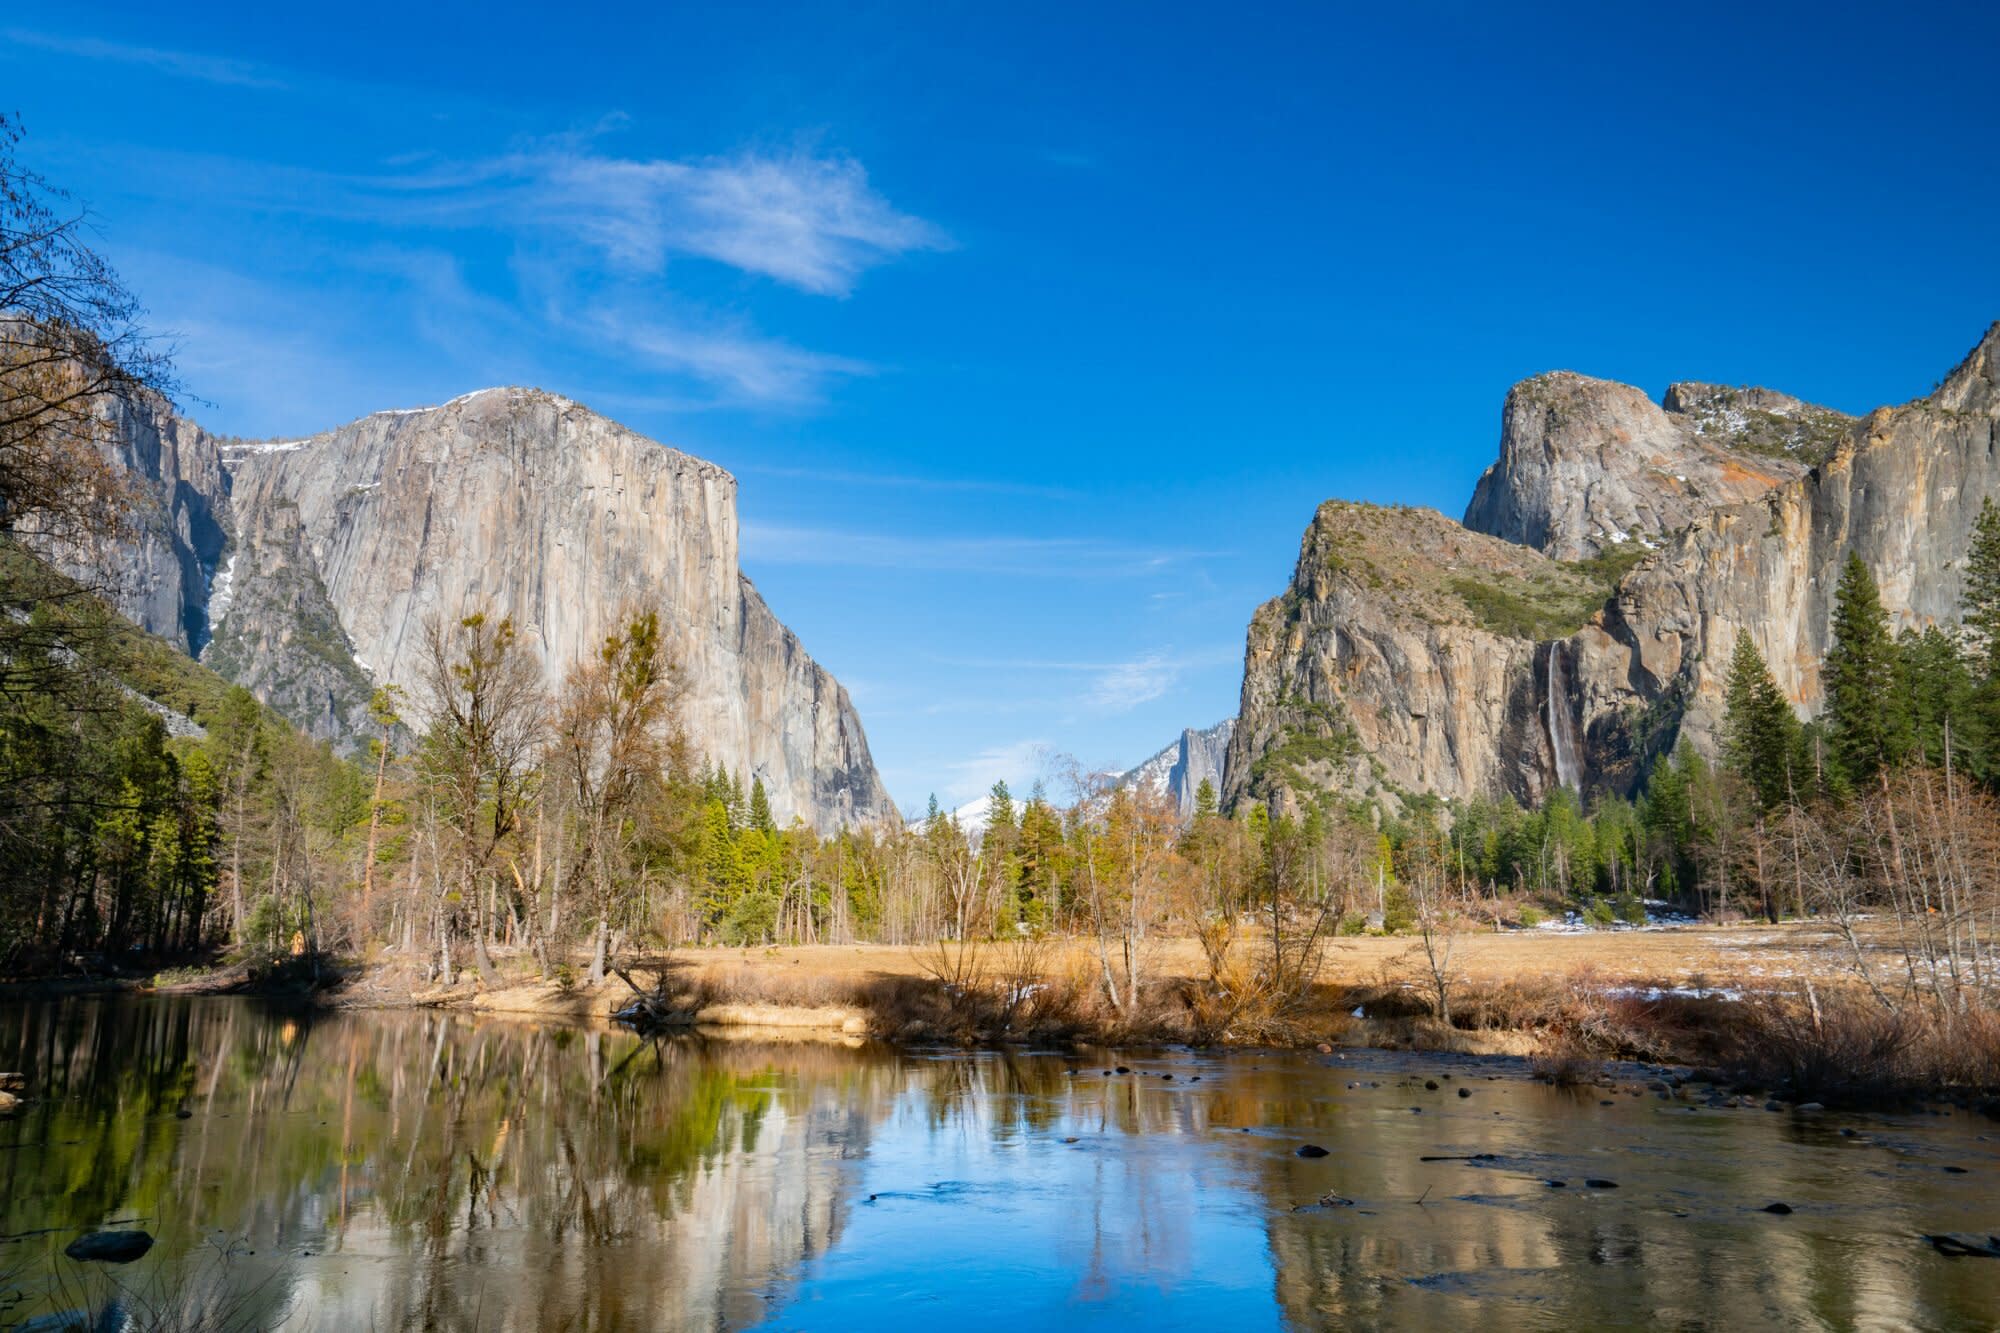 Yosemite National Park Is Bringing Back Reservation System to Limit Crowds